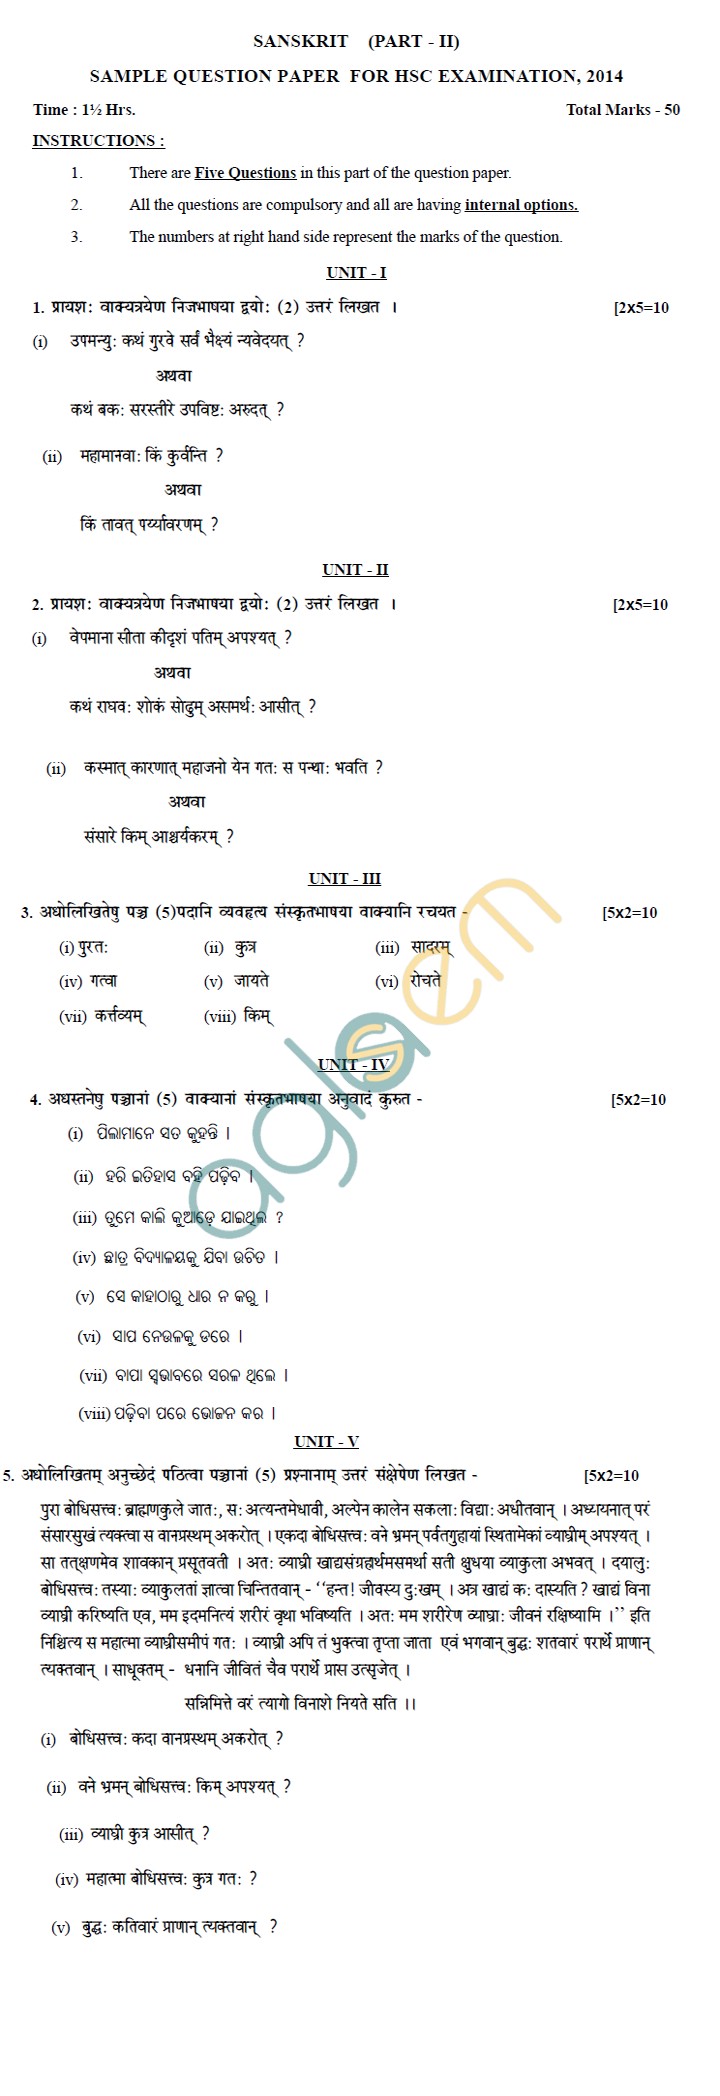 Odisha Board Sample Papers for HSC Exam 2014 - Sanskrit